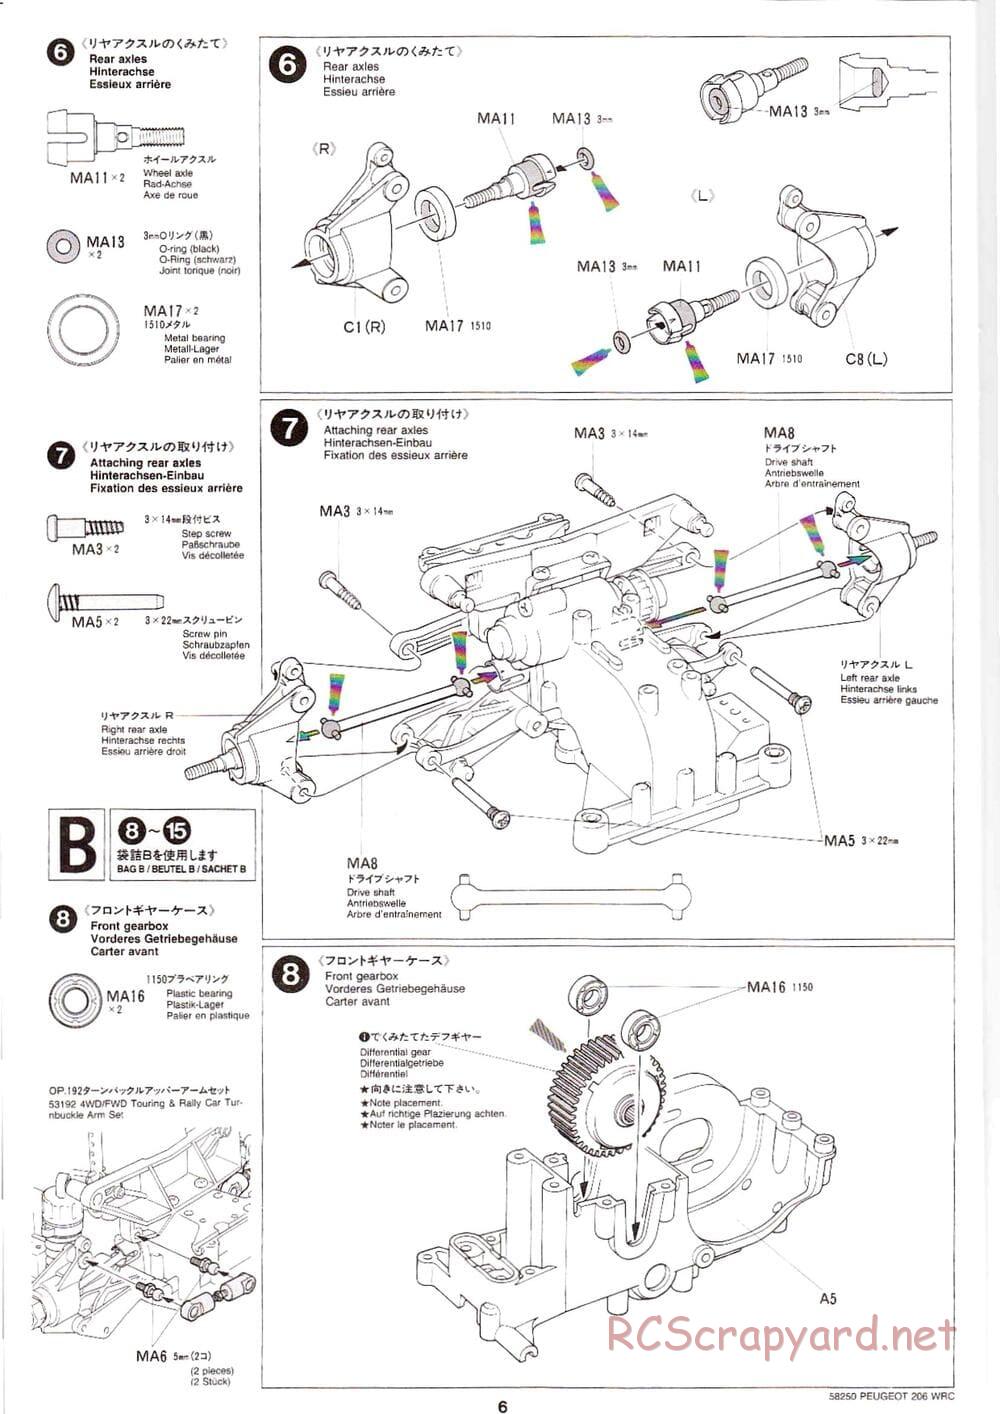 Tamiya - Peugeot 206 WRC - TA-03FS Chassis - Manual - Page 6